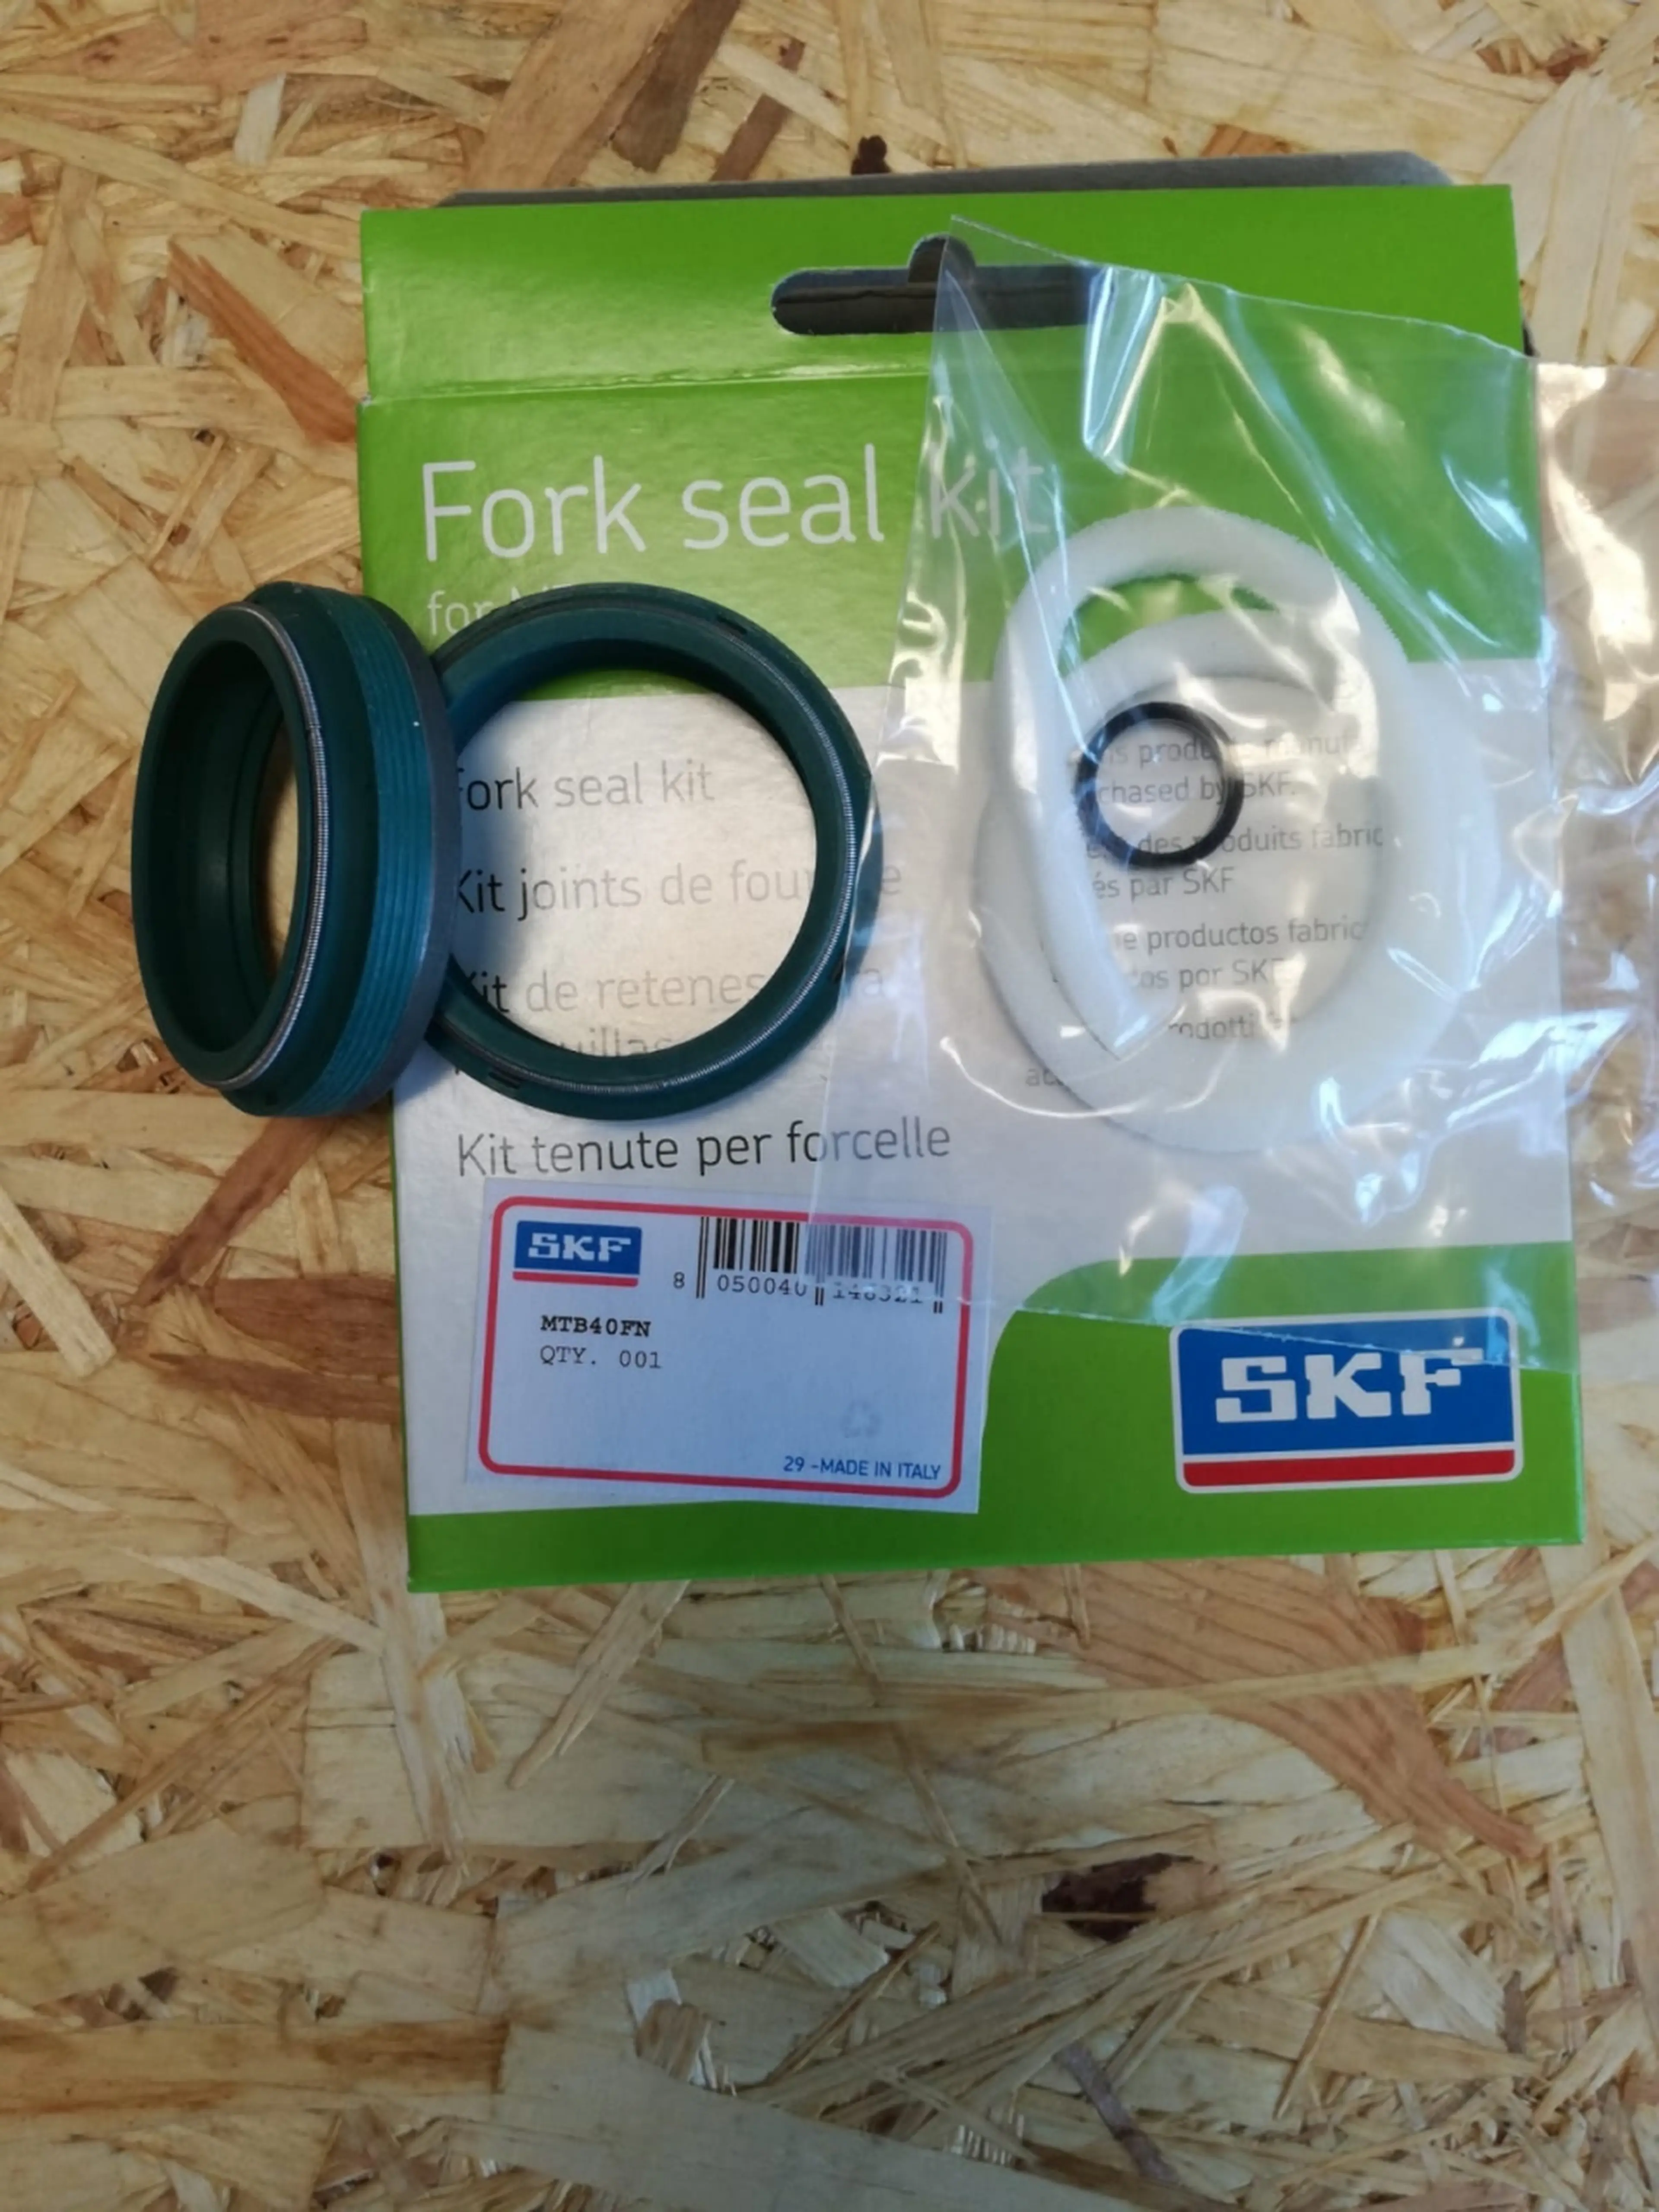 Image Kit reparatie skf furca fox  MTB40FN